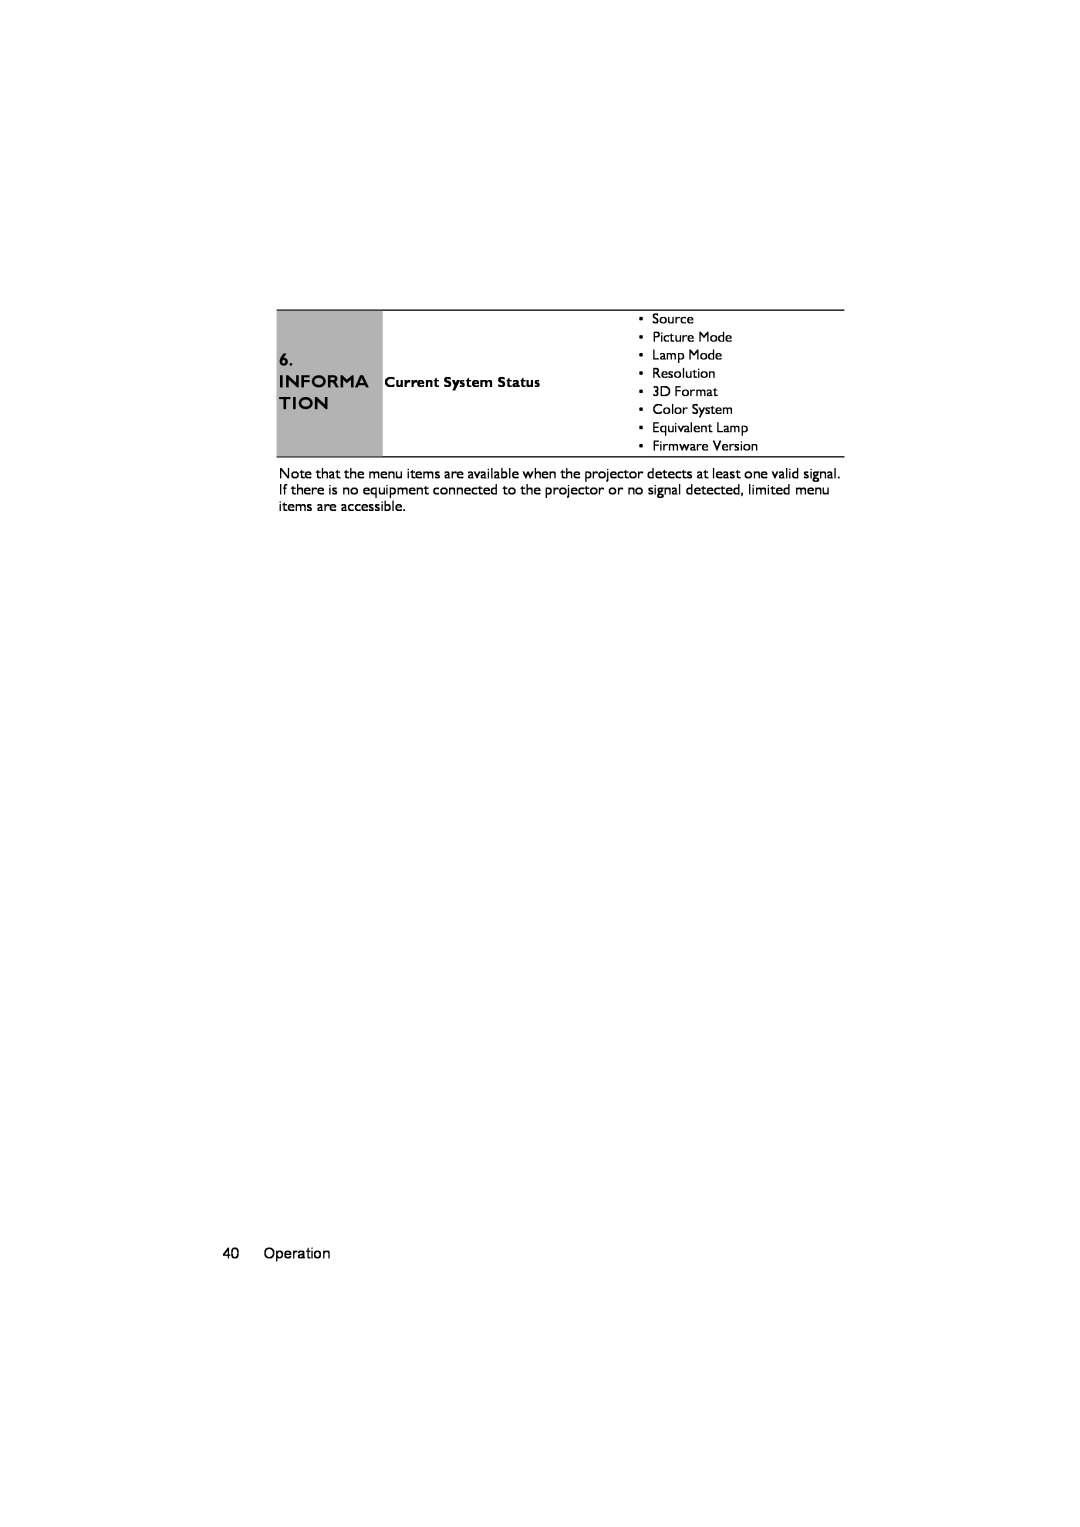 BenQ MX722 user manual Informa, Tion, Current System Status 